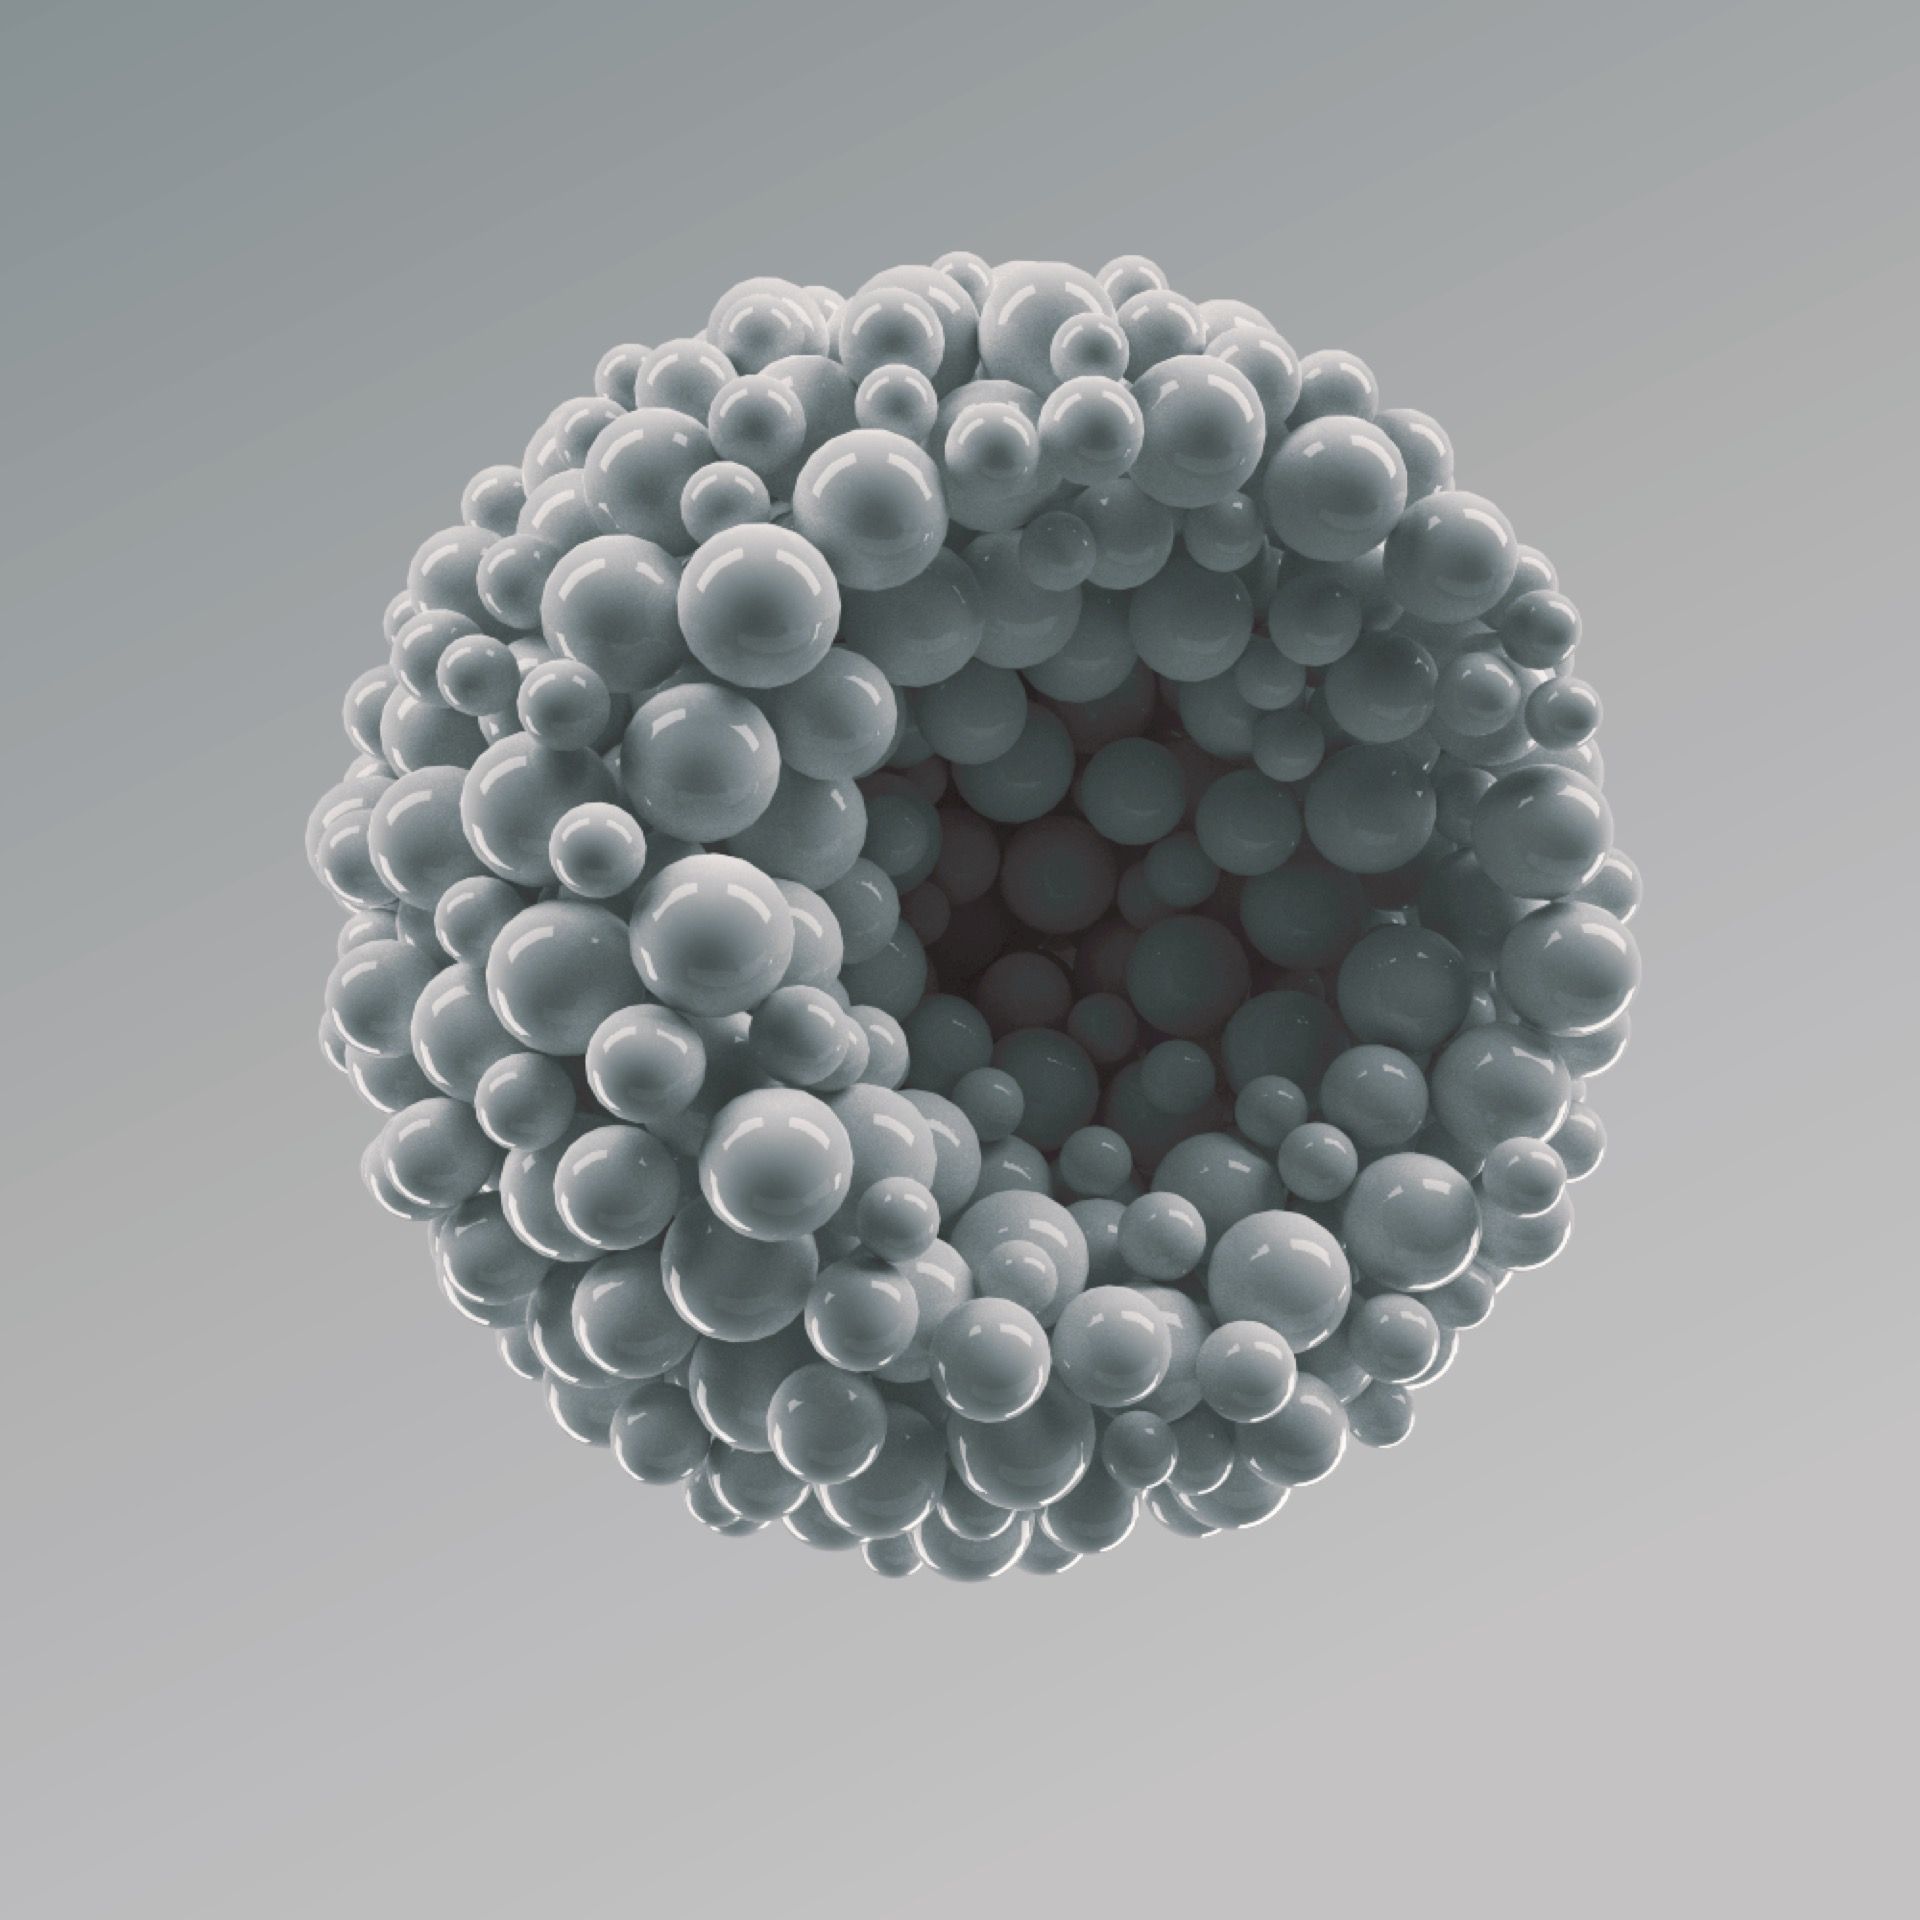 Procedural Design: Packed Spheres